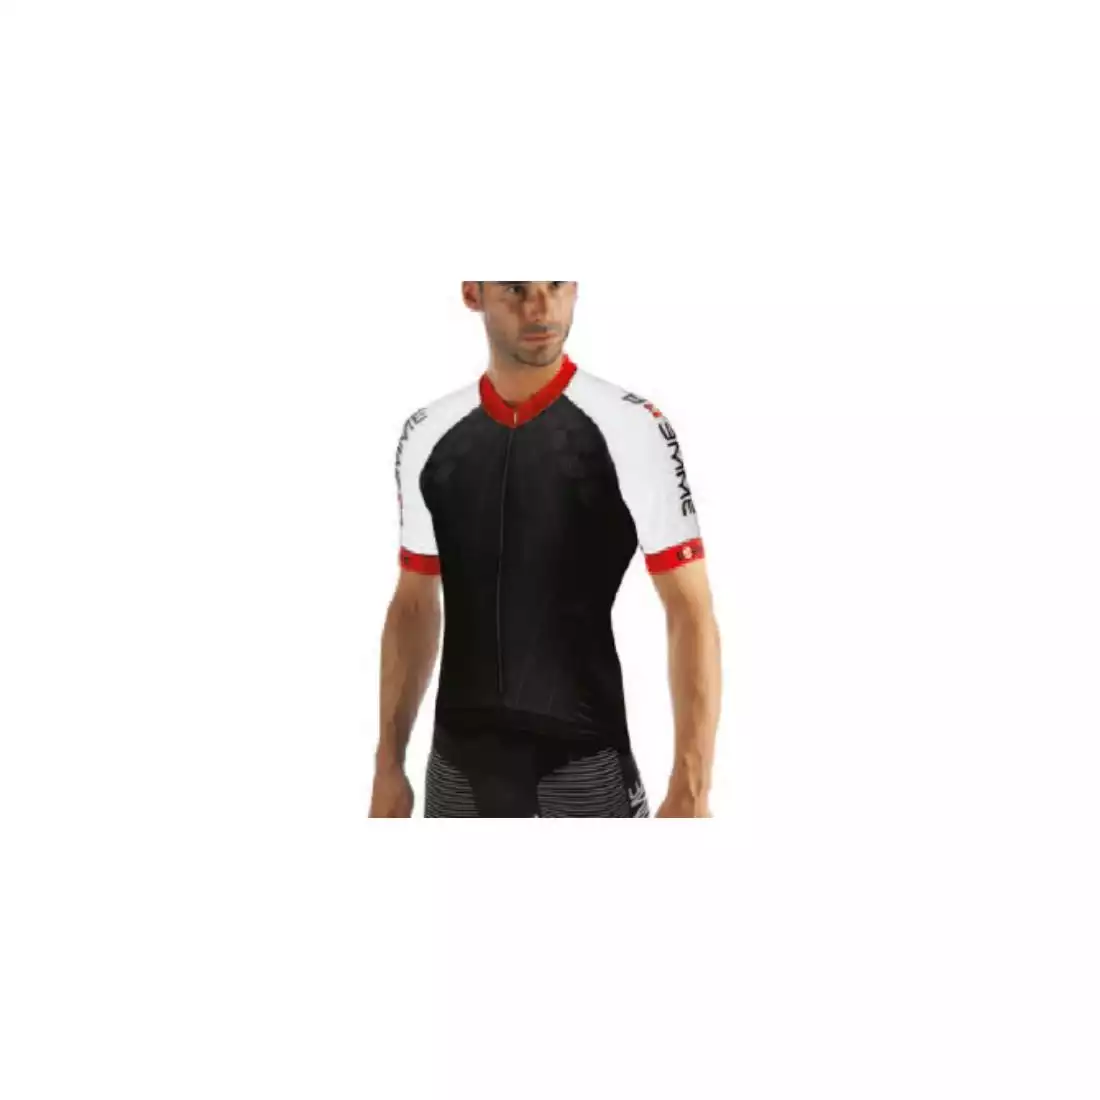 Biemme SEAMLESS men's cycling jersey, black